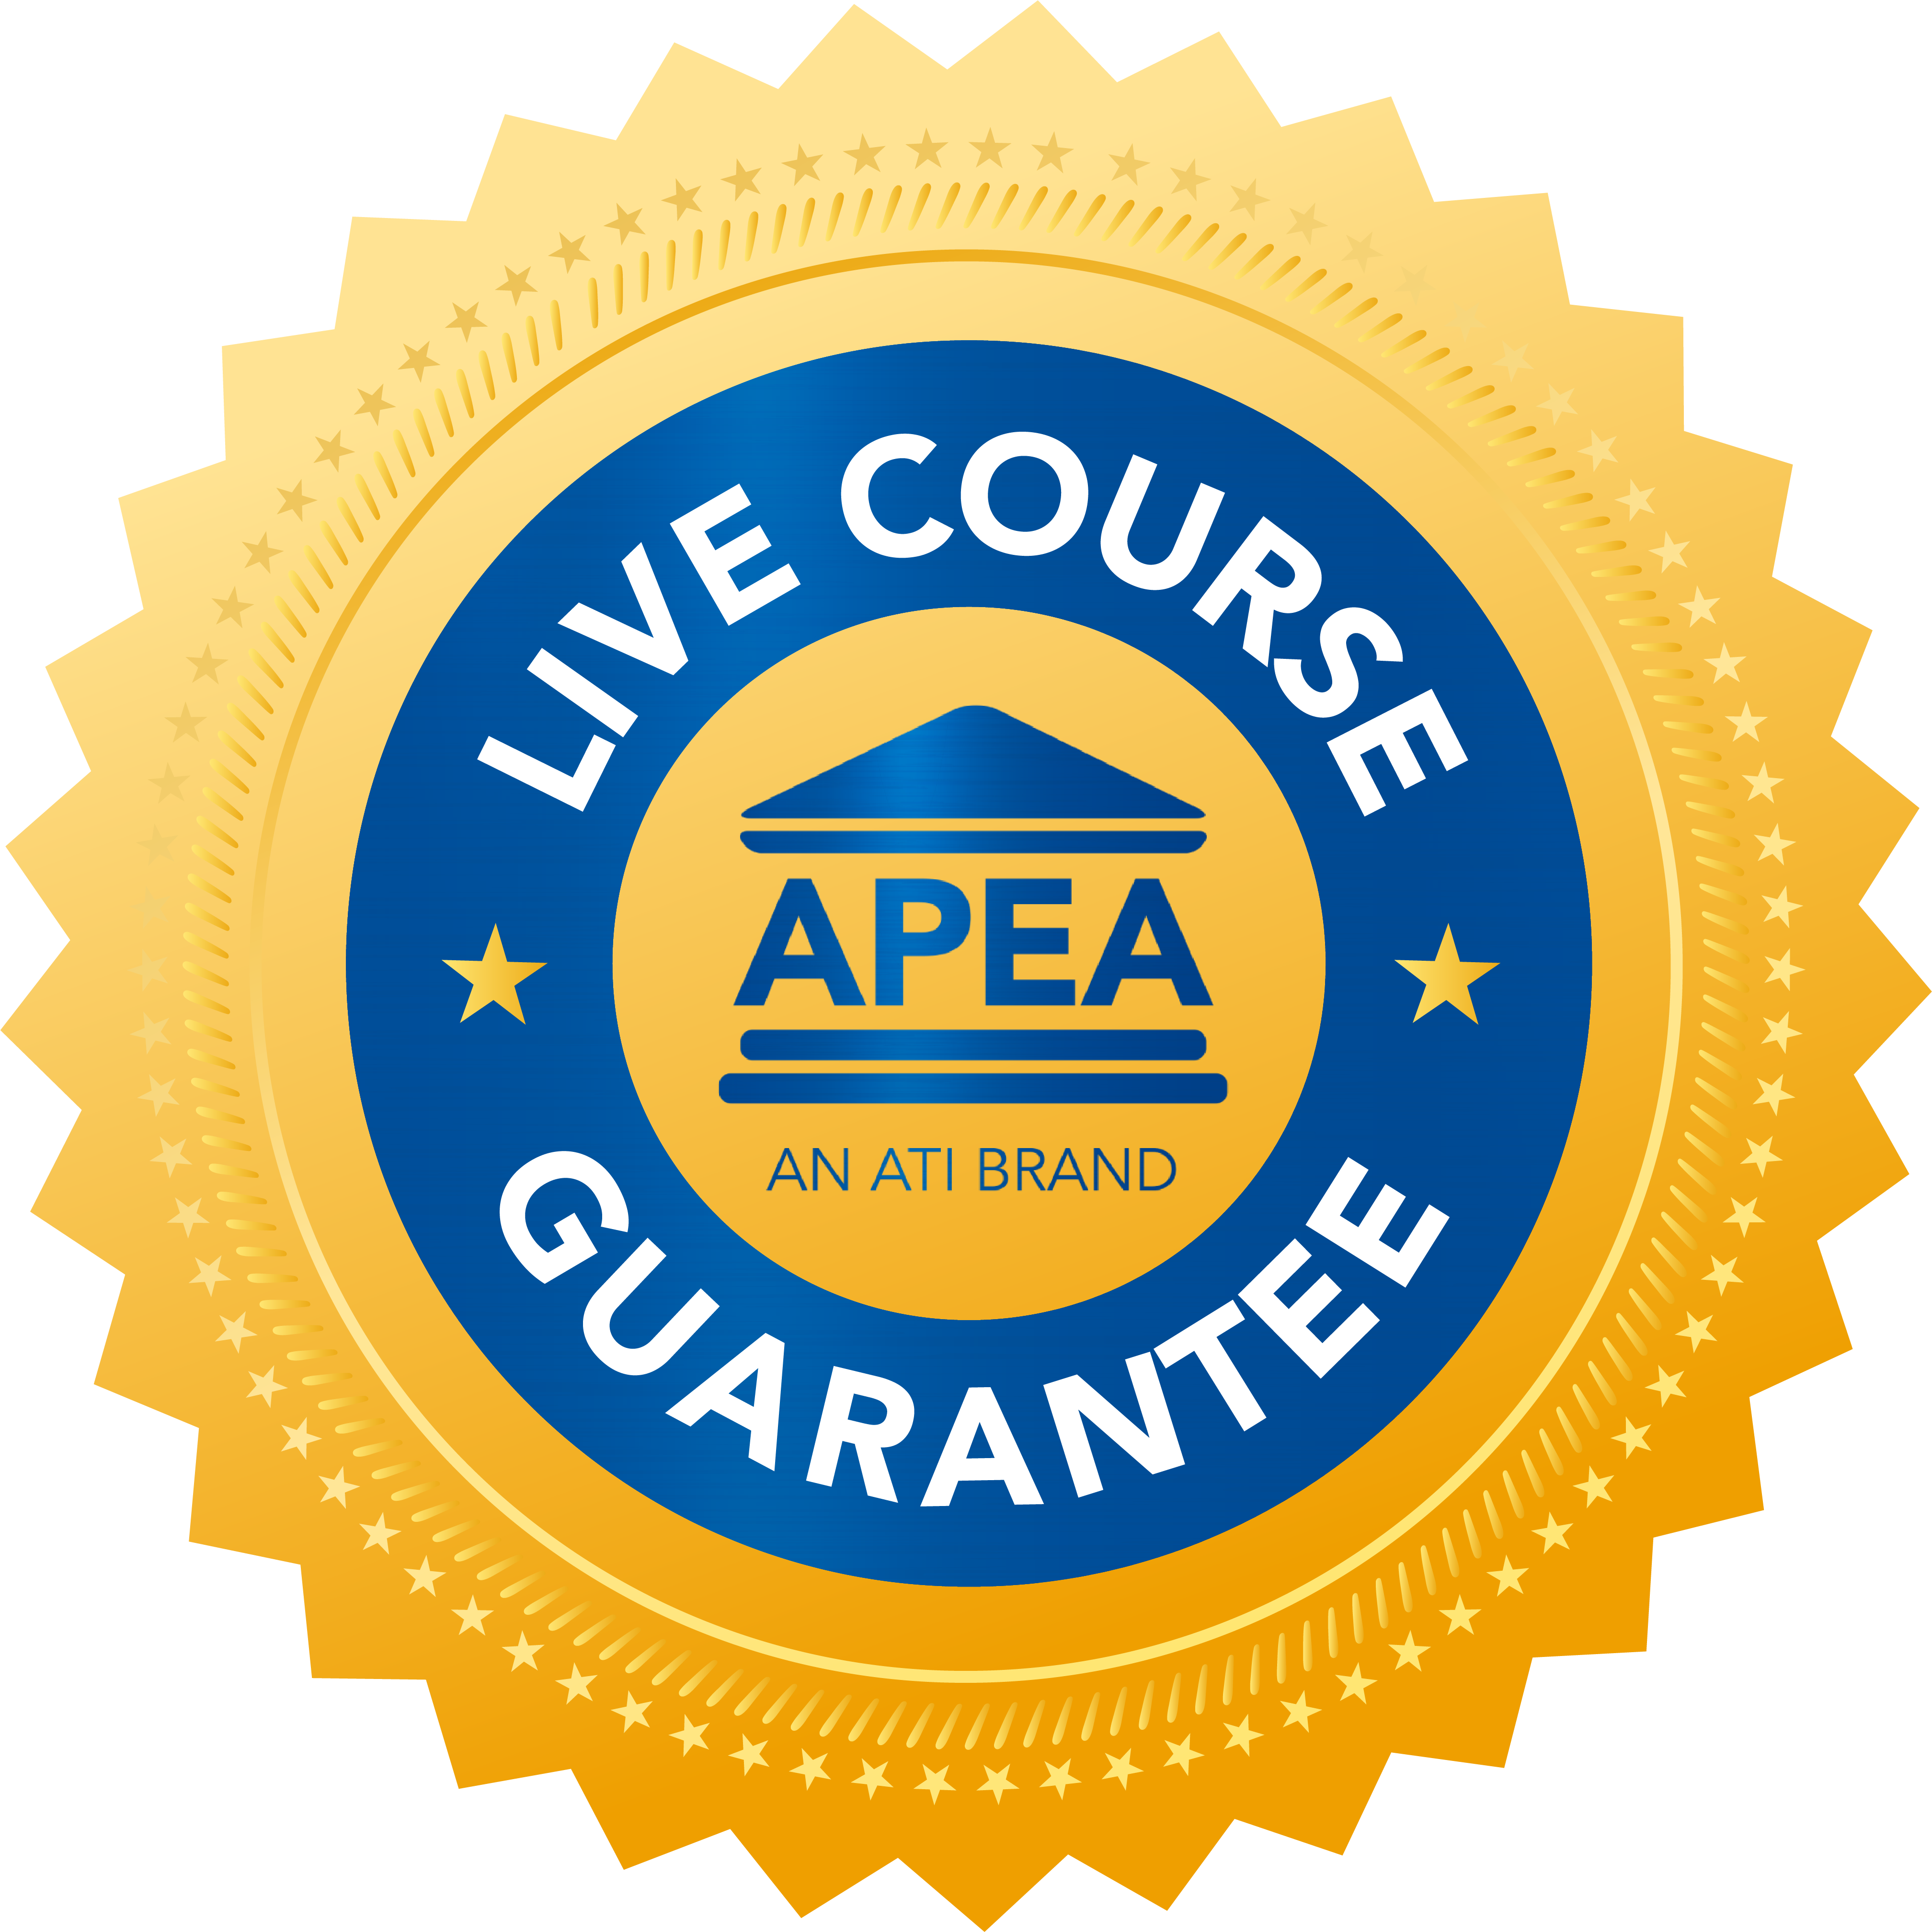 APEA Live Review Course Guarantee